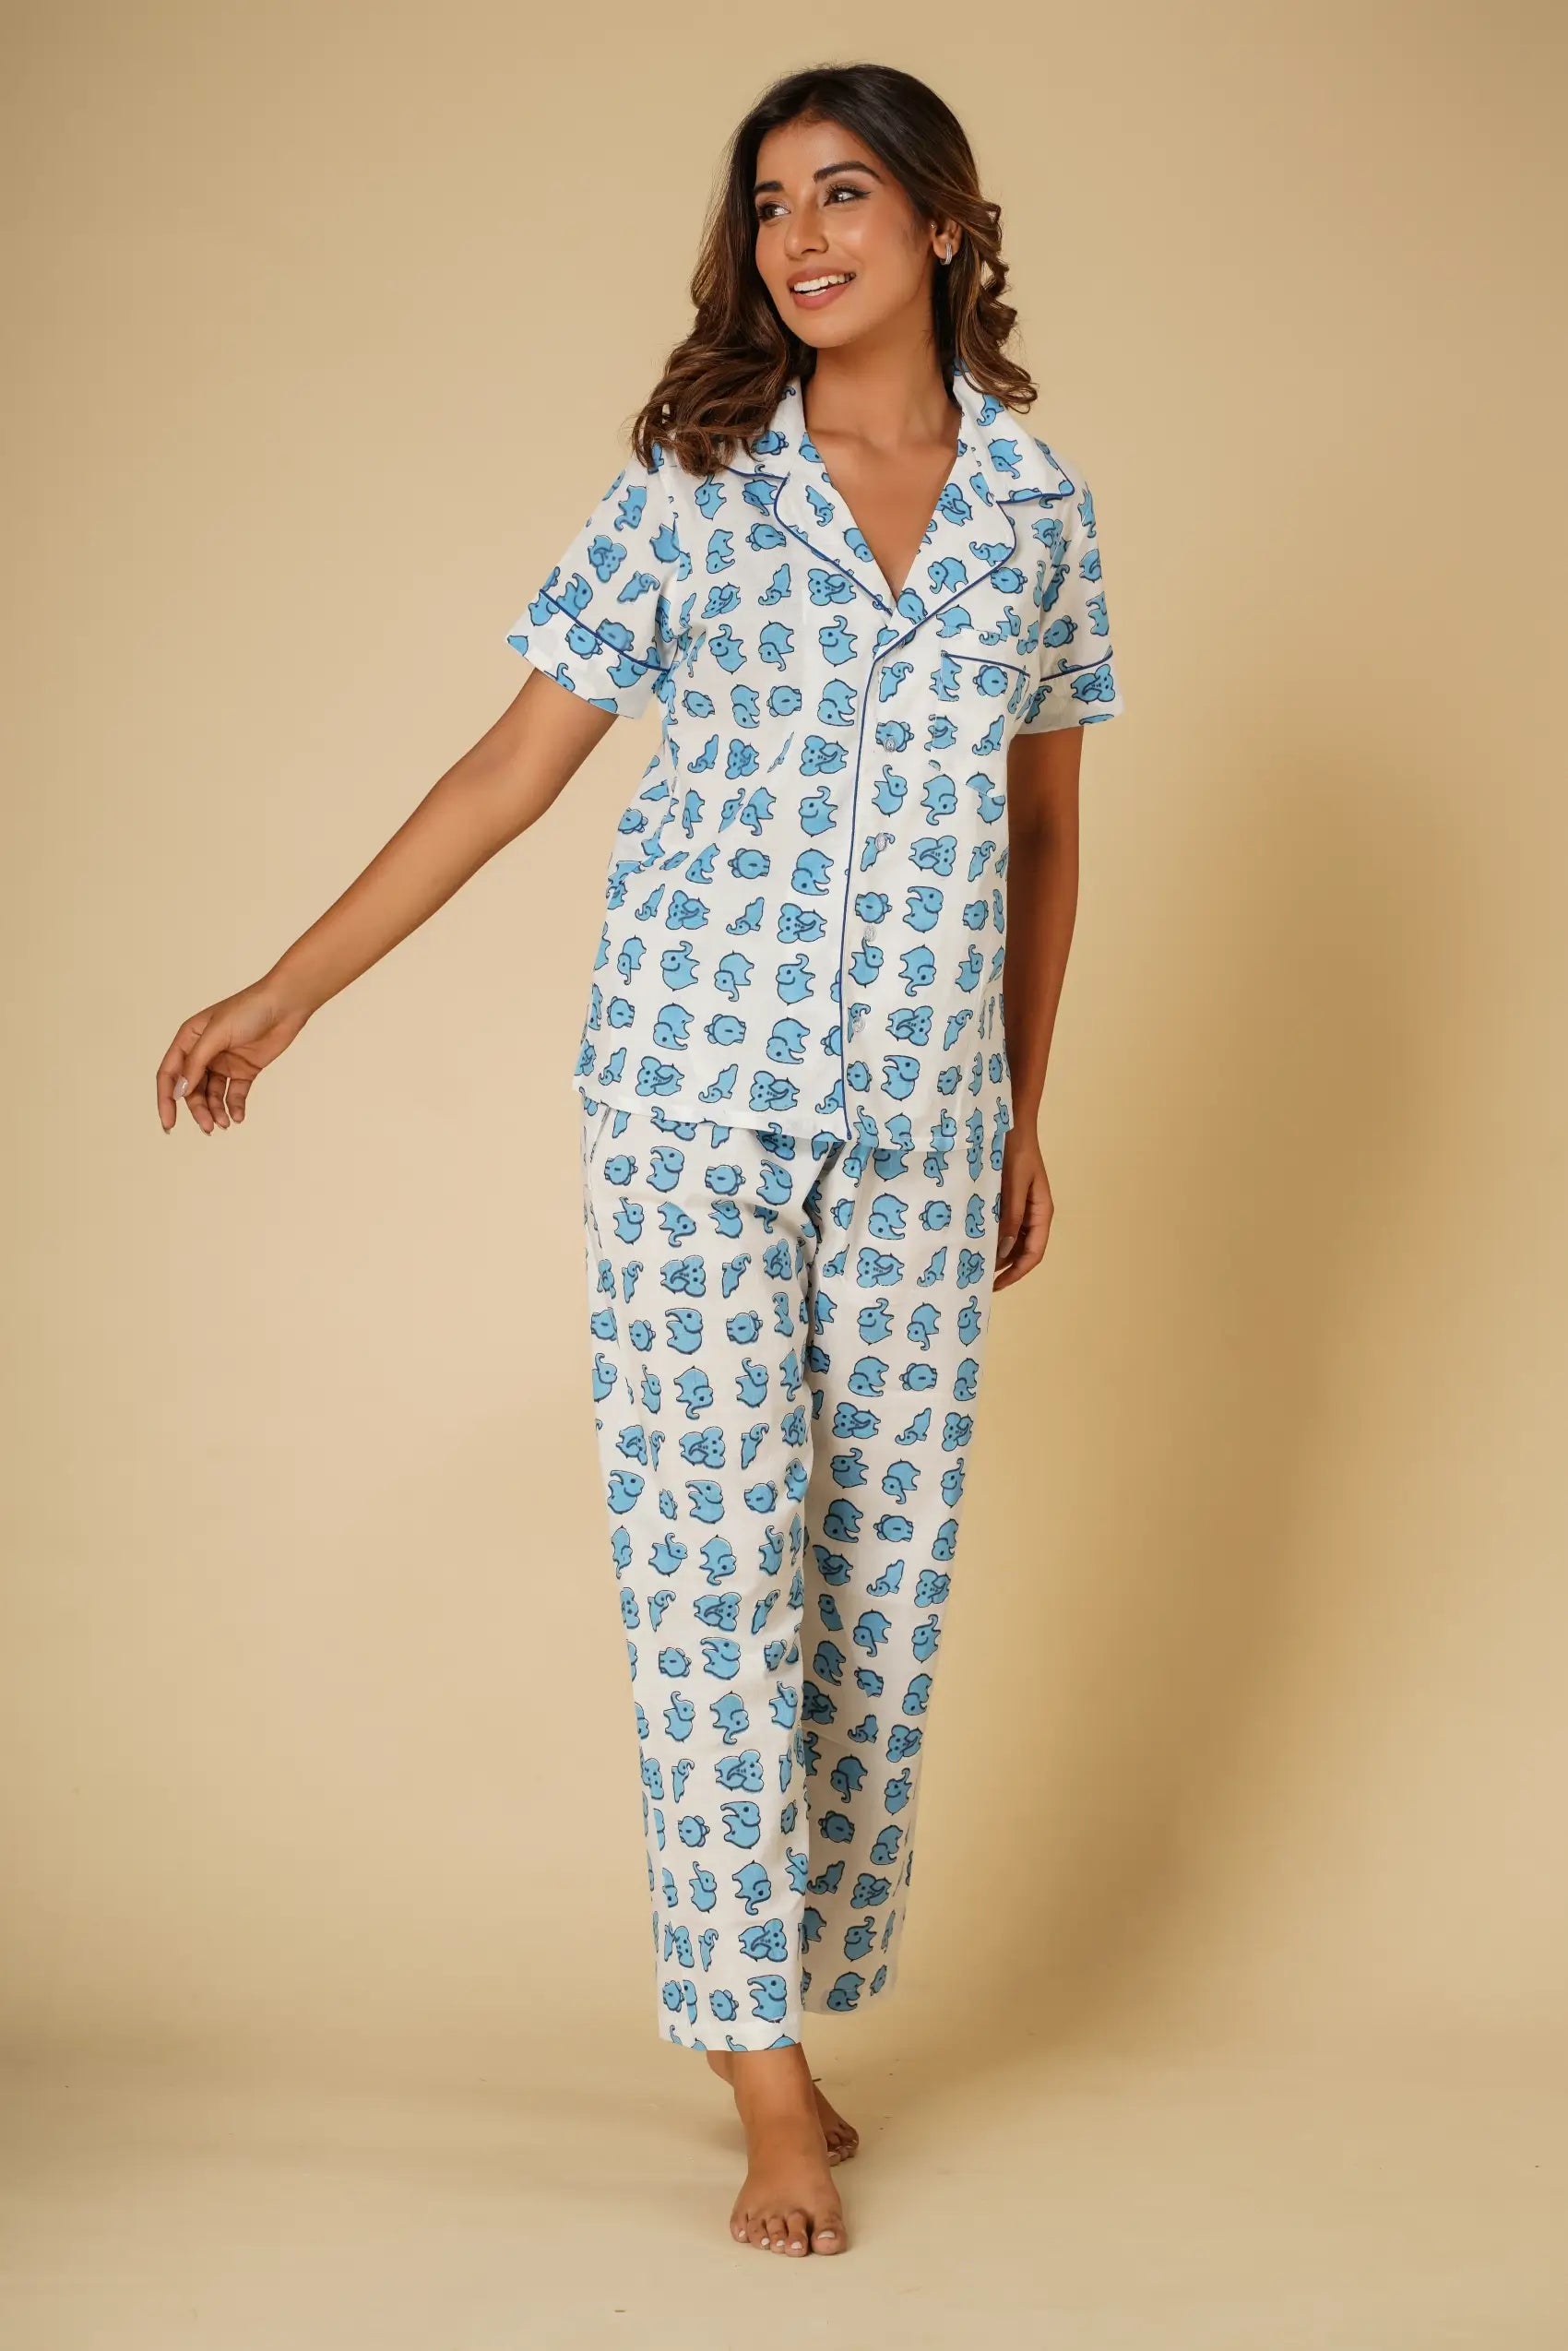 Elephant print nightsuit with pyjamas- Set of two